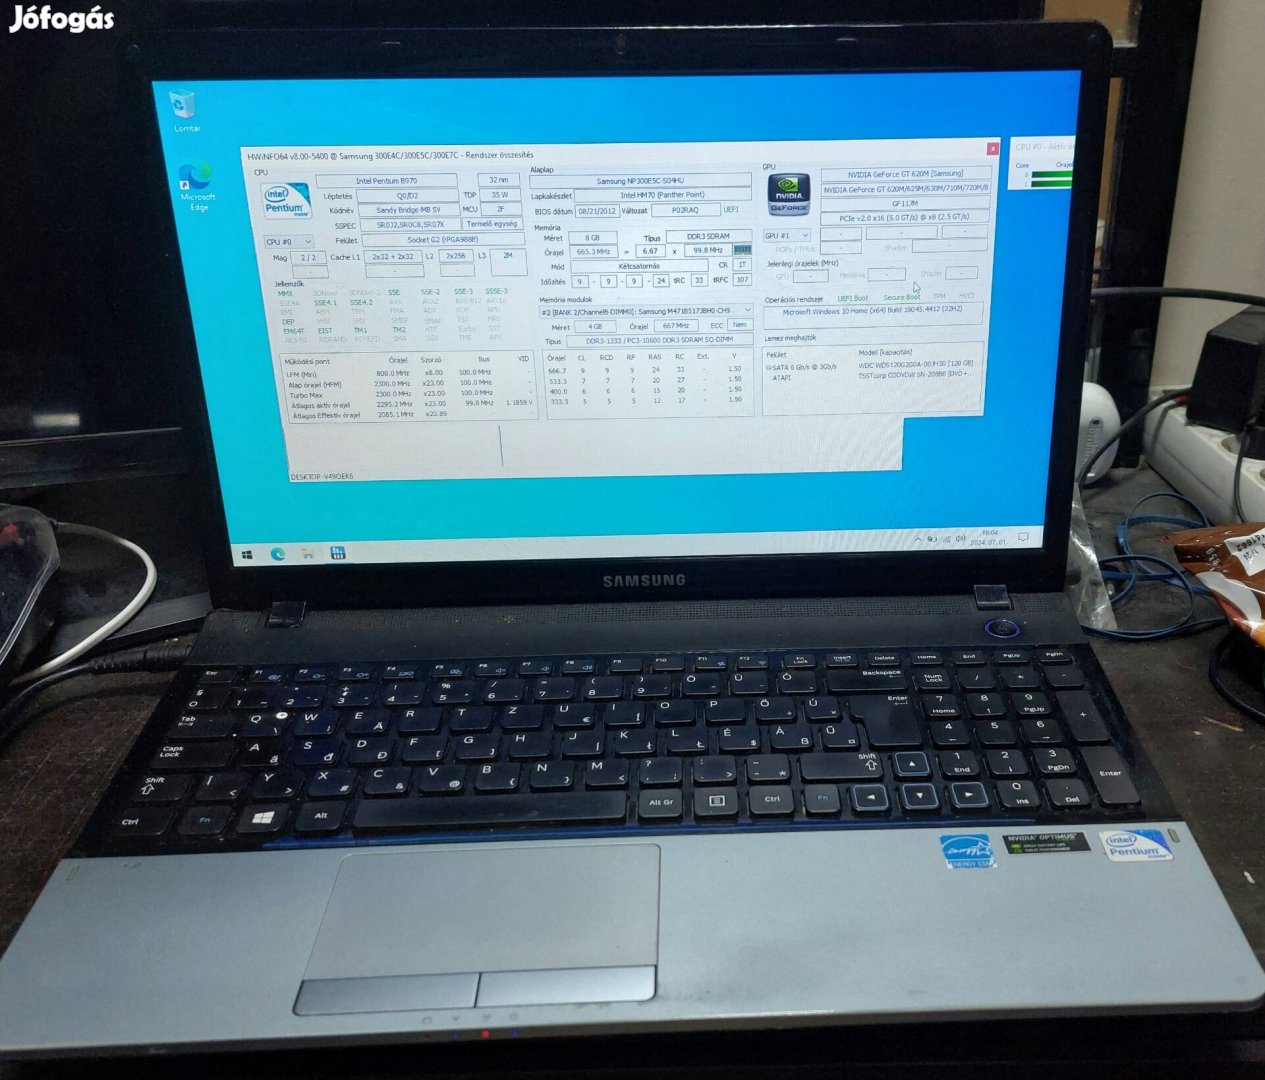 Samsung Laptop 8gb ram + ssd + nvidia gpu